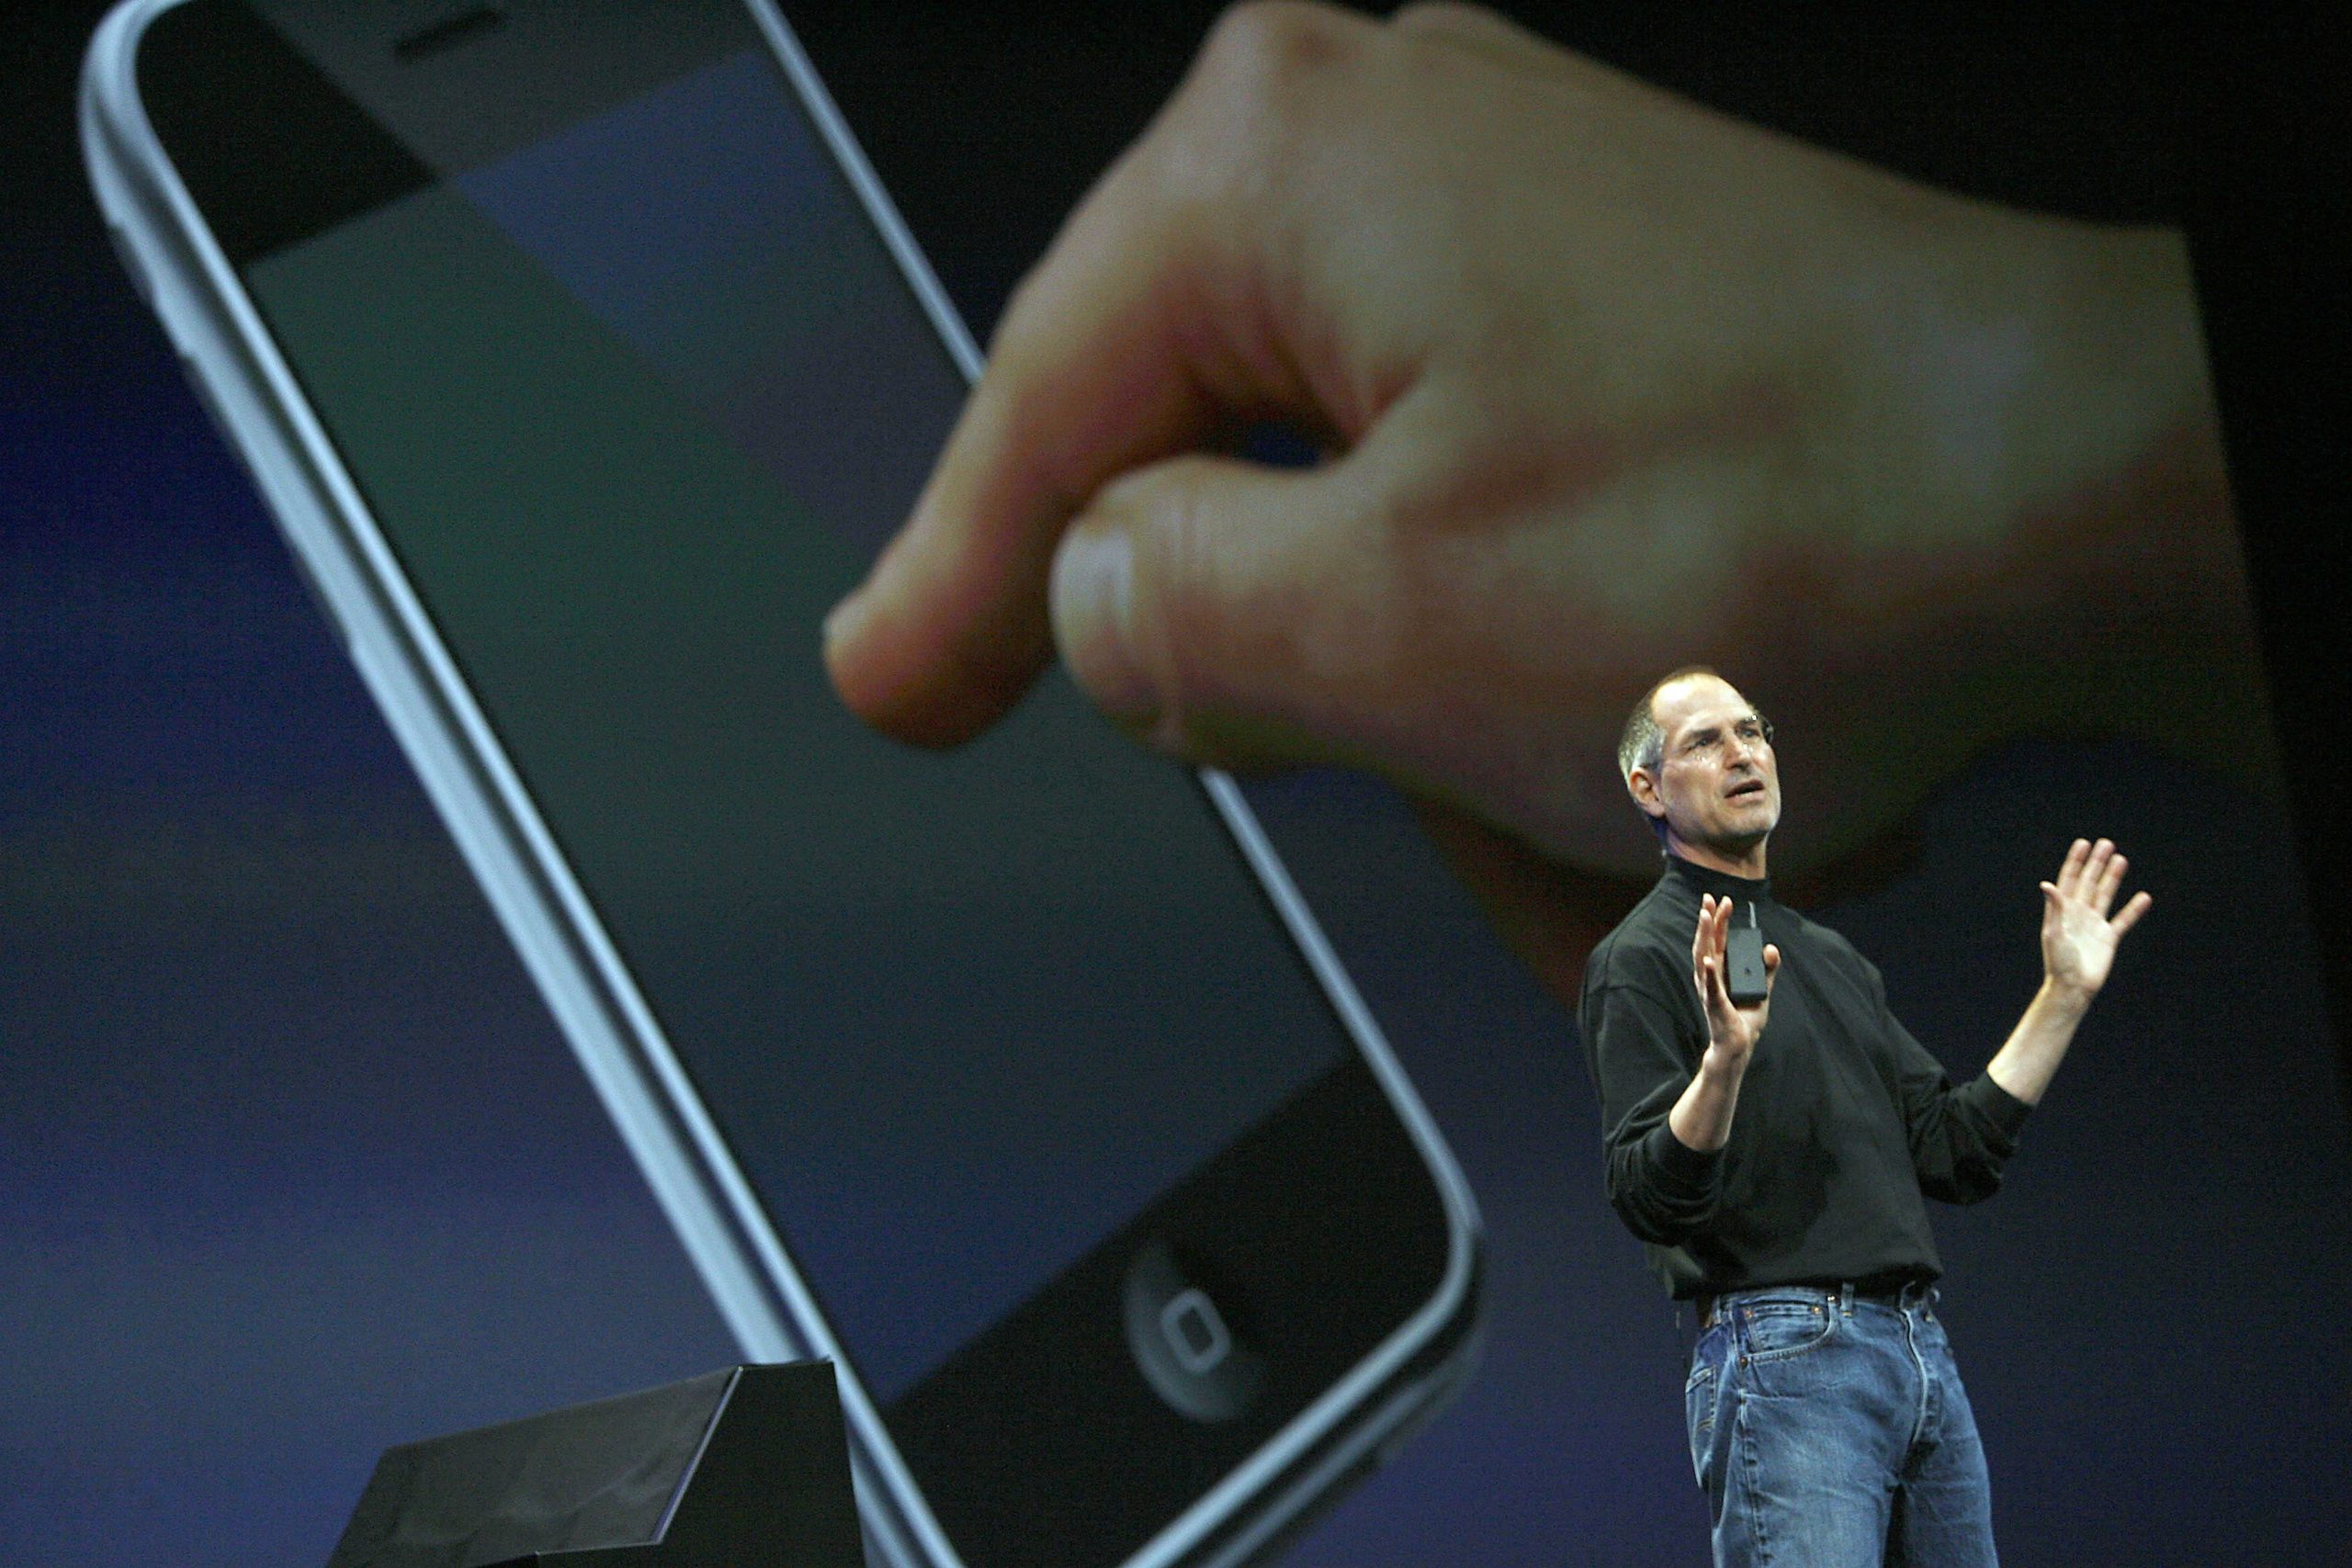 Steve Jobs presenting the iPhone in 2007